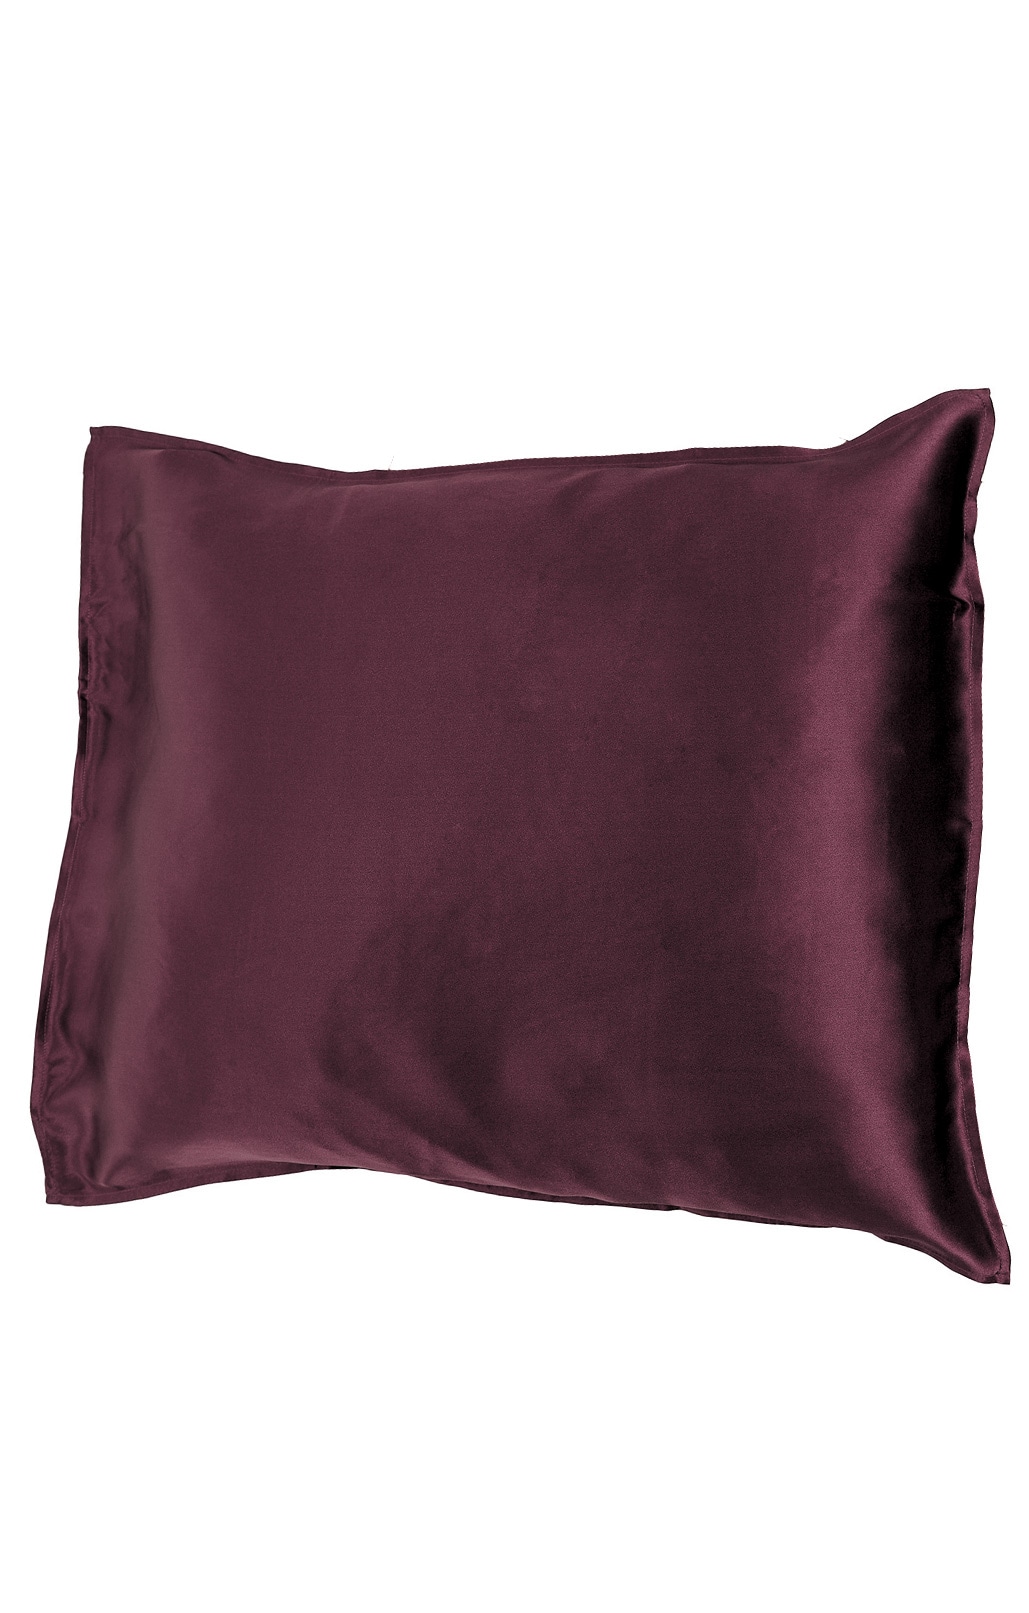 Silk pillowcase, dark purple